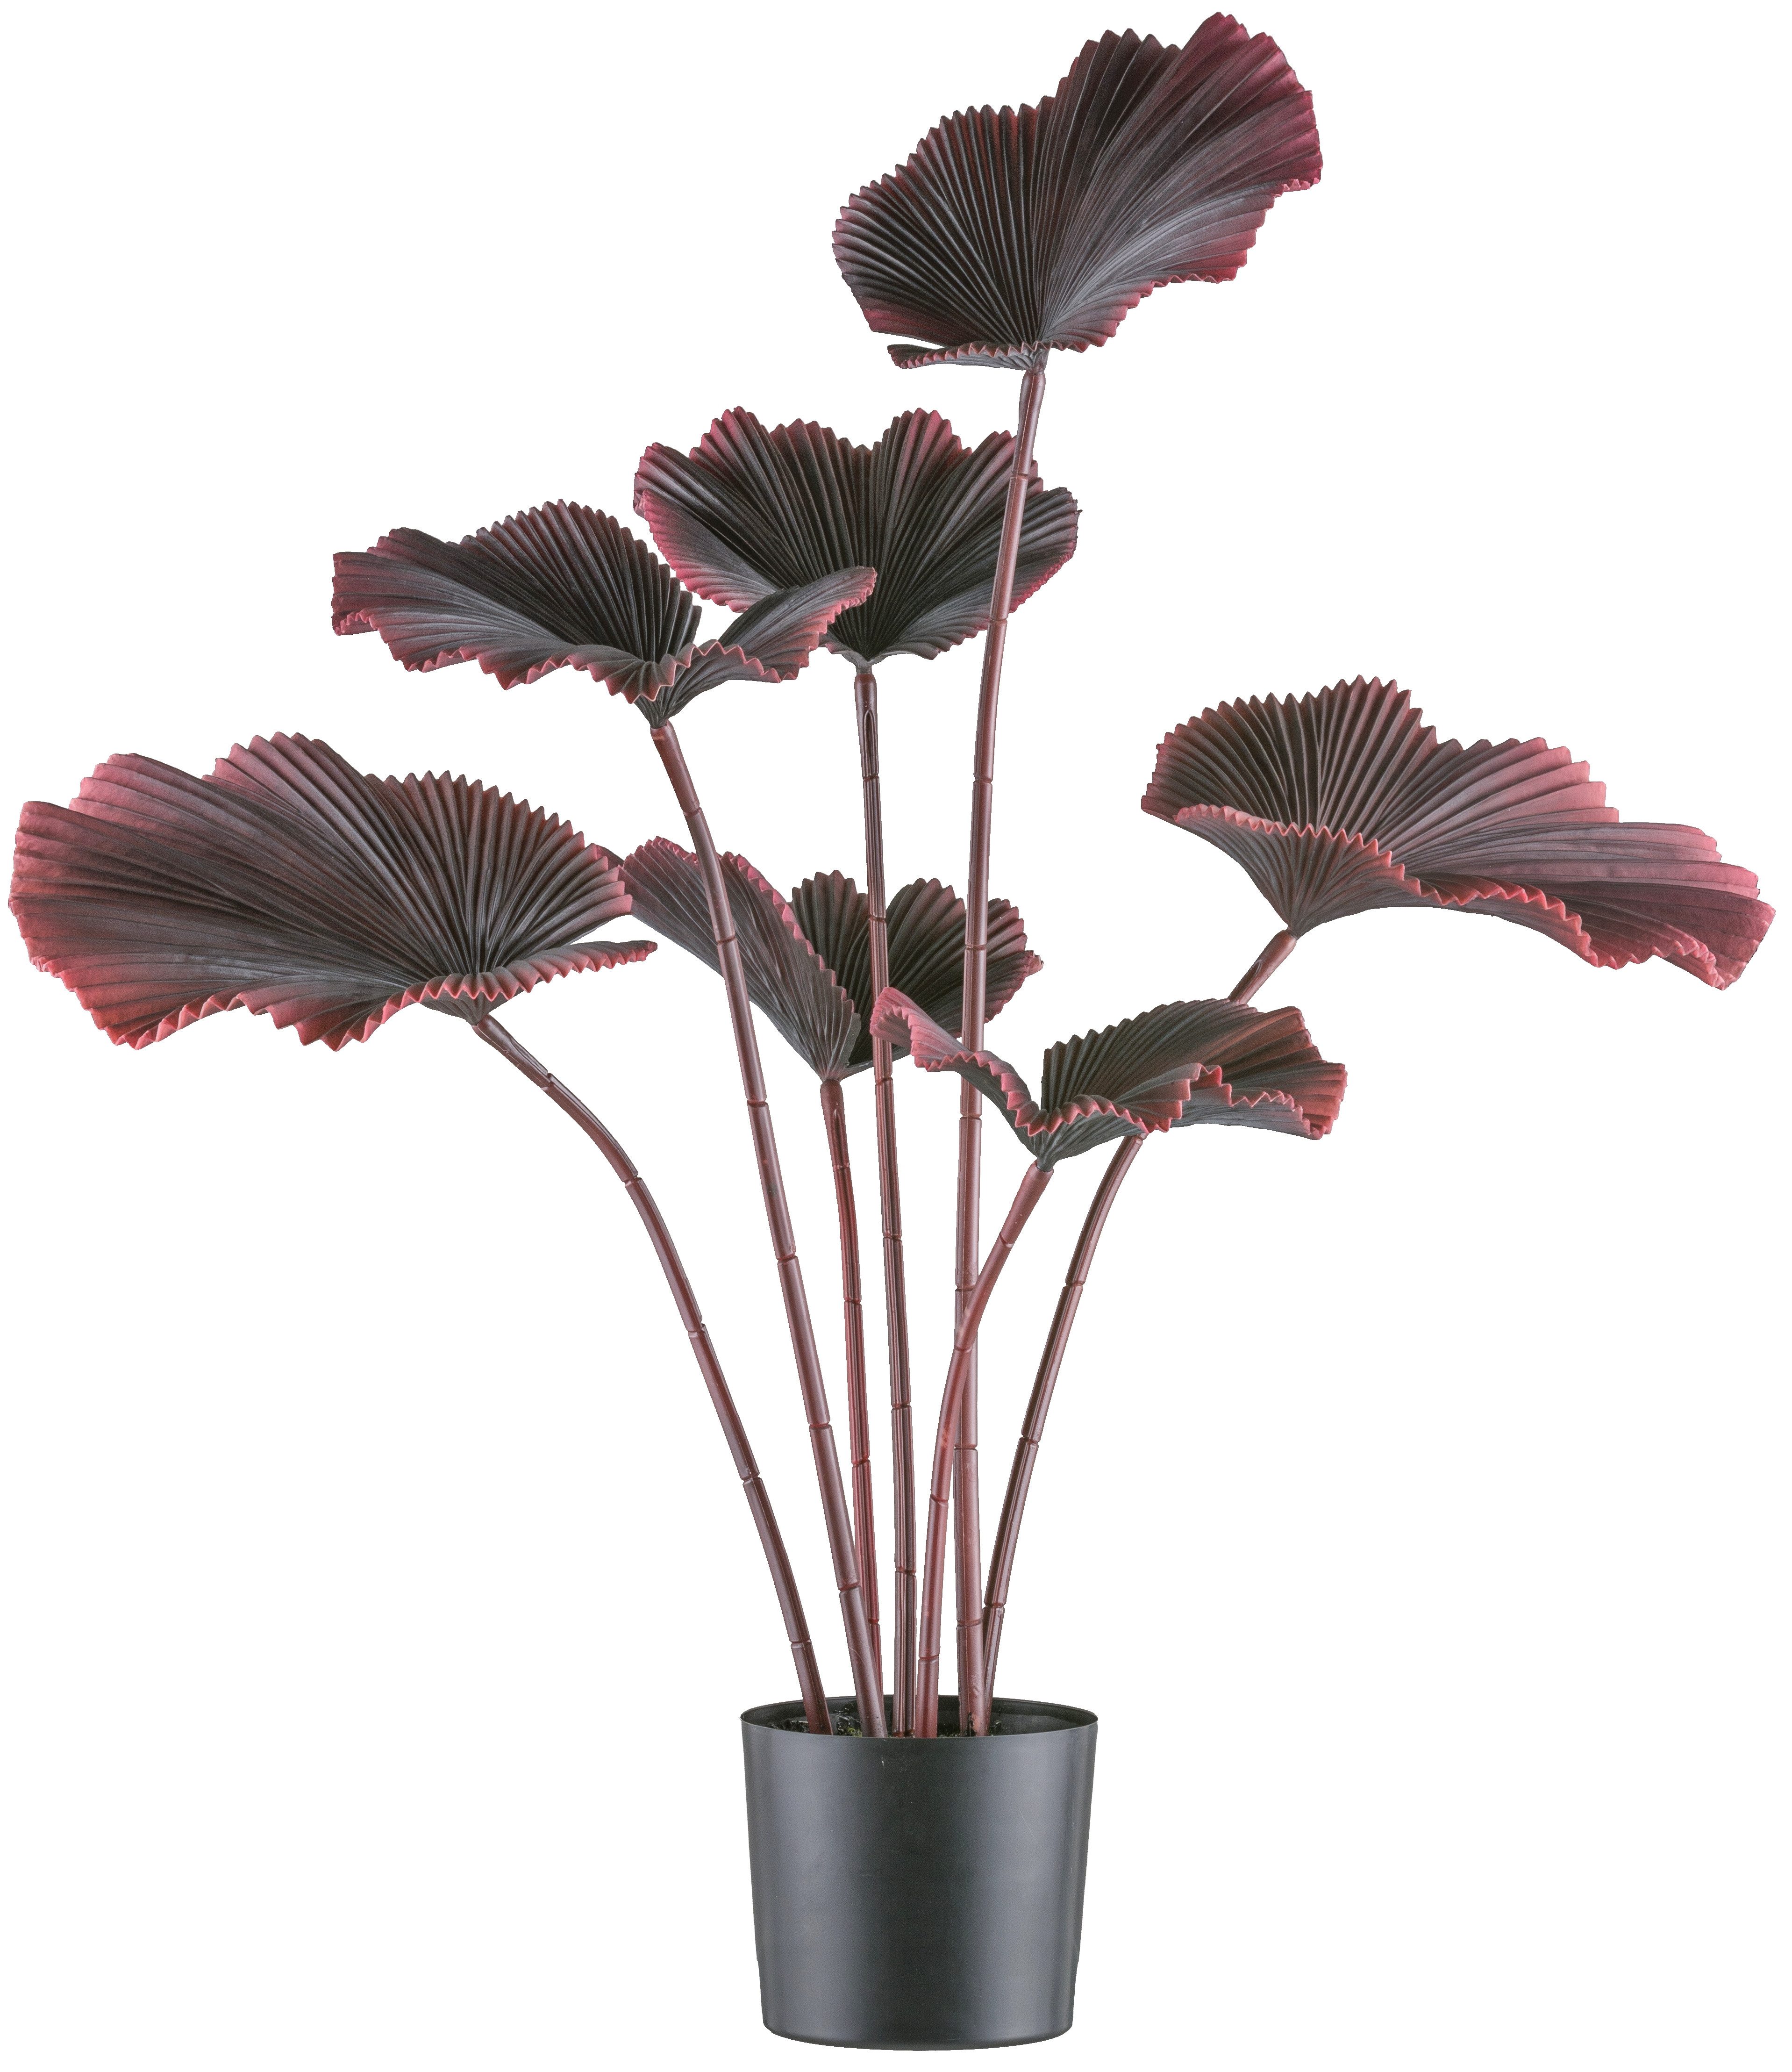 Kunstpflanze Strahlenpalme 100 cm gross im schwarzen Kunststofftopf 19,5 x 17,5 cm, Creativ green